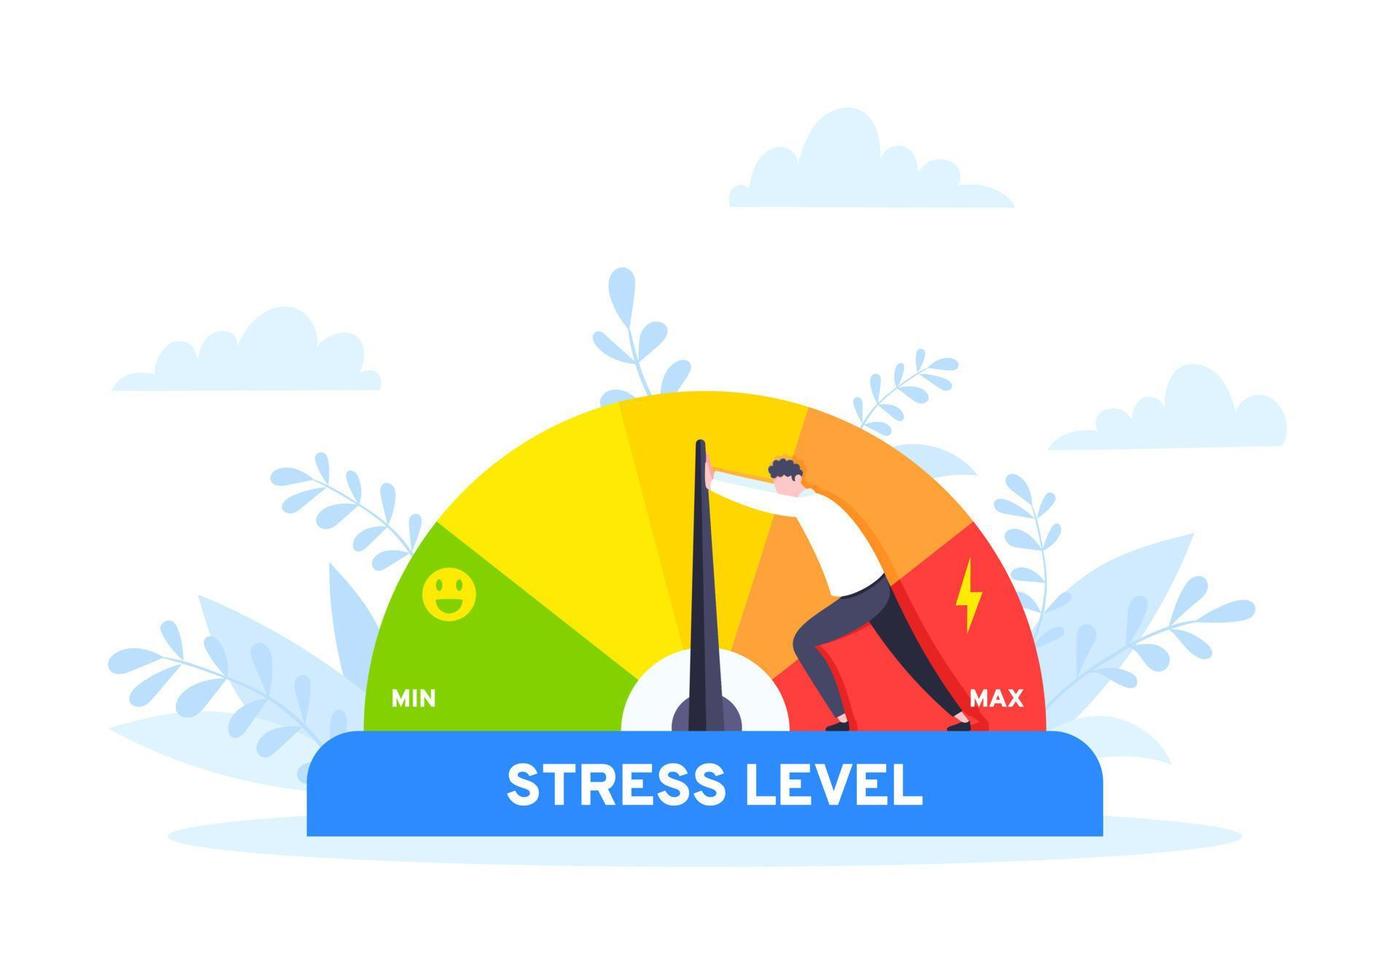 Reduce stress level flat style design concept vector illustration.